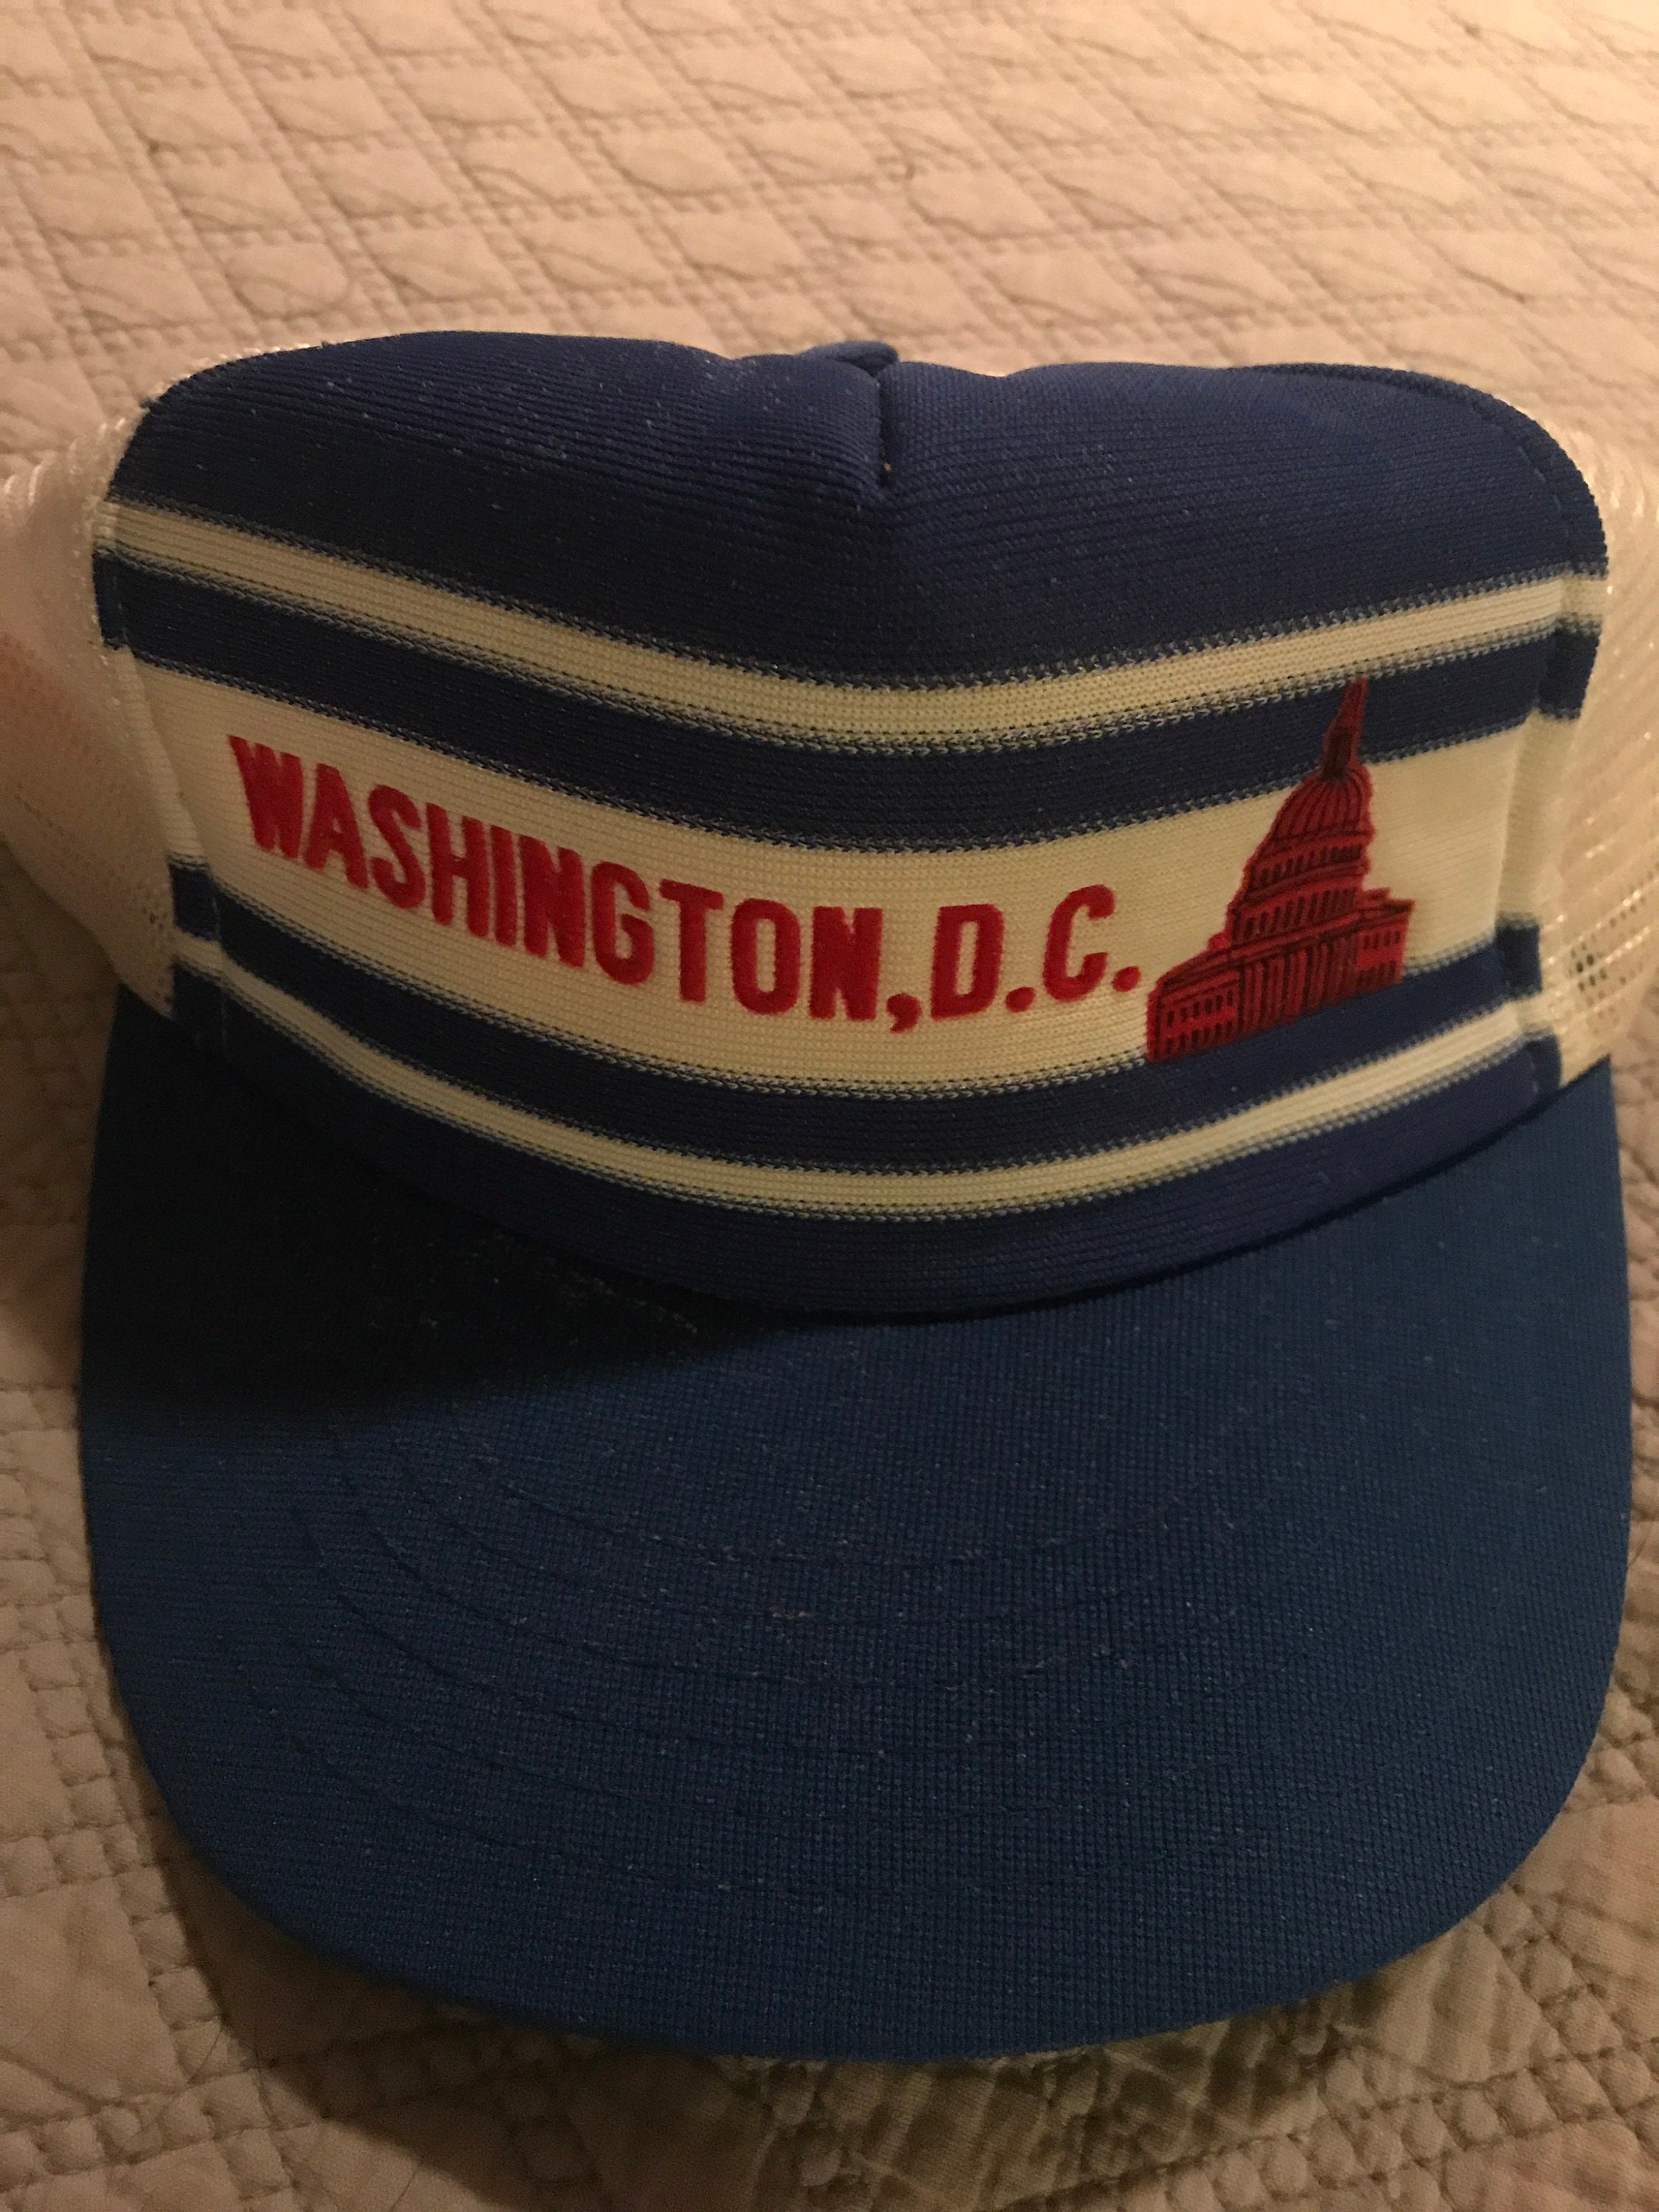 Vintage Trucker Hats. Trucker Hats. Snap Back Hats. Washington. Natural ...